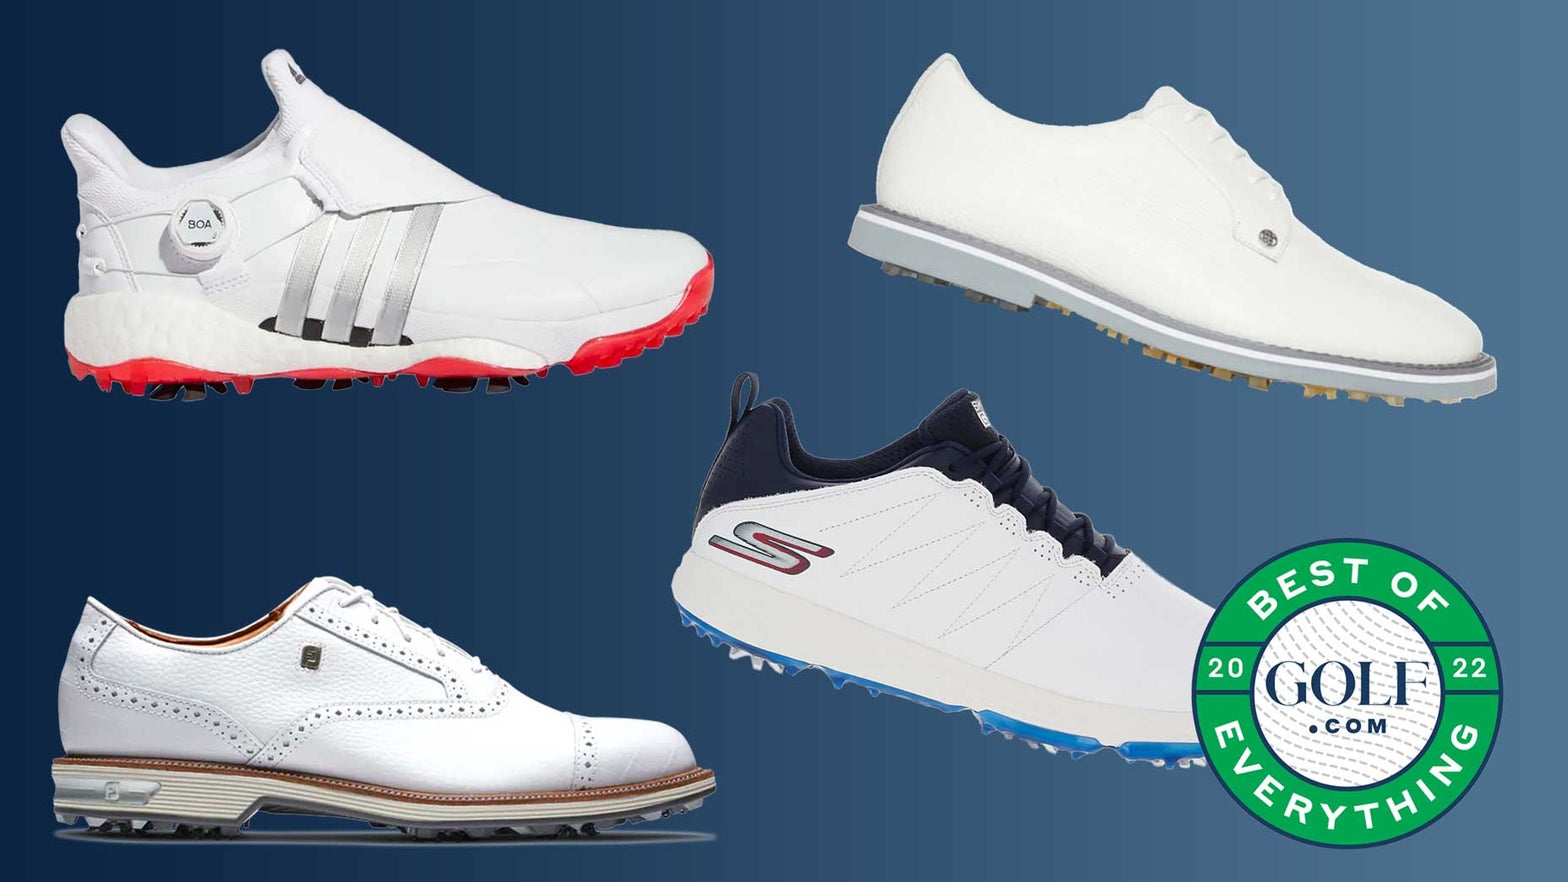 Prooi scheidsrechter Giraffe Best Golf Shoes 2022: Here are the 6 best men's golf shoes with spikes